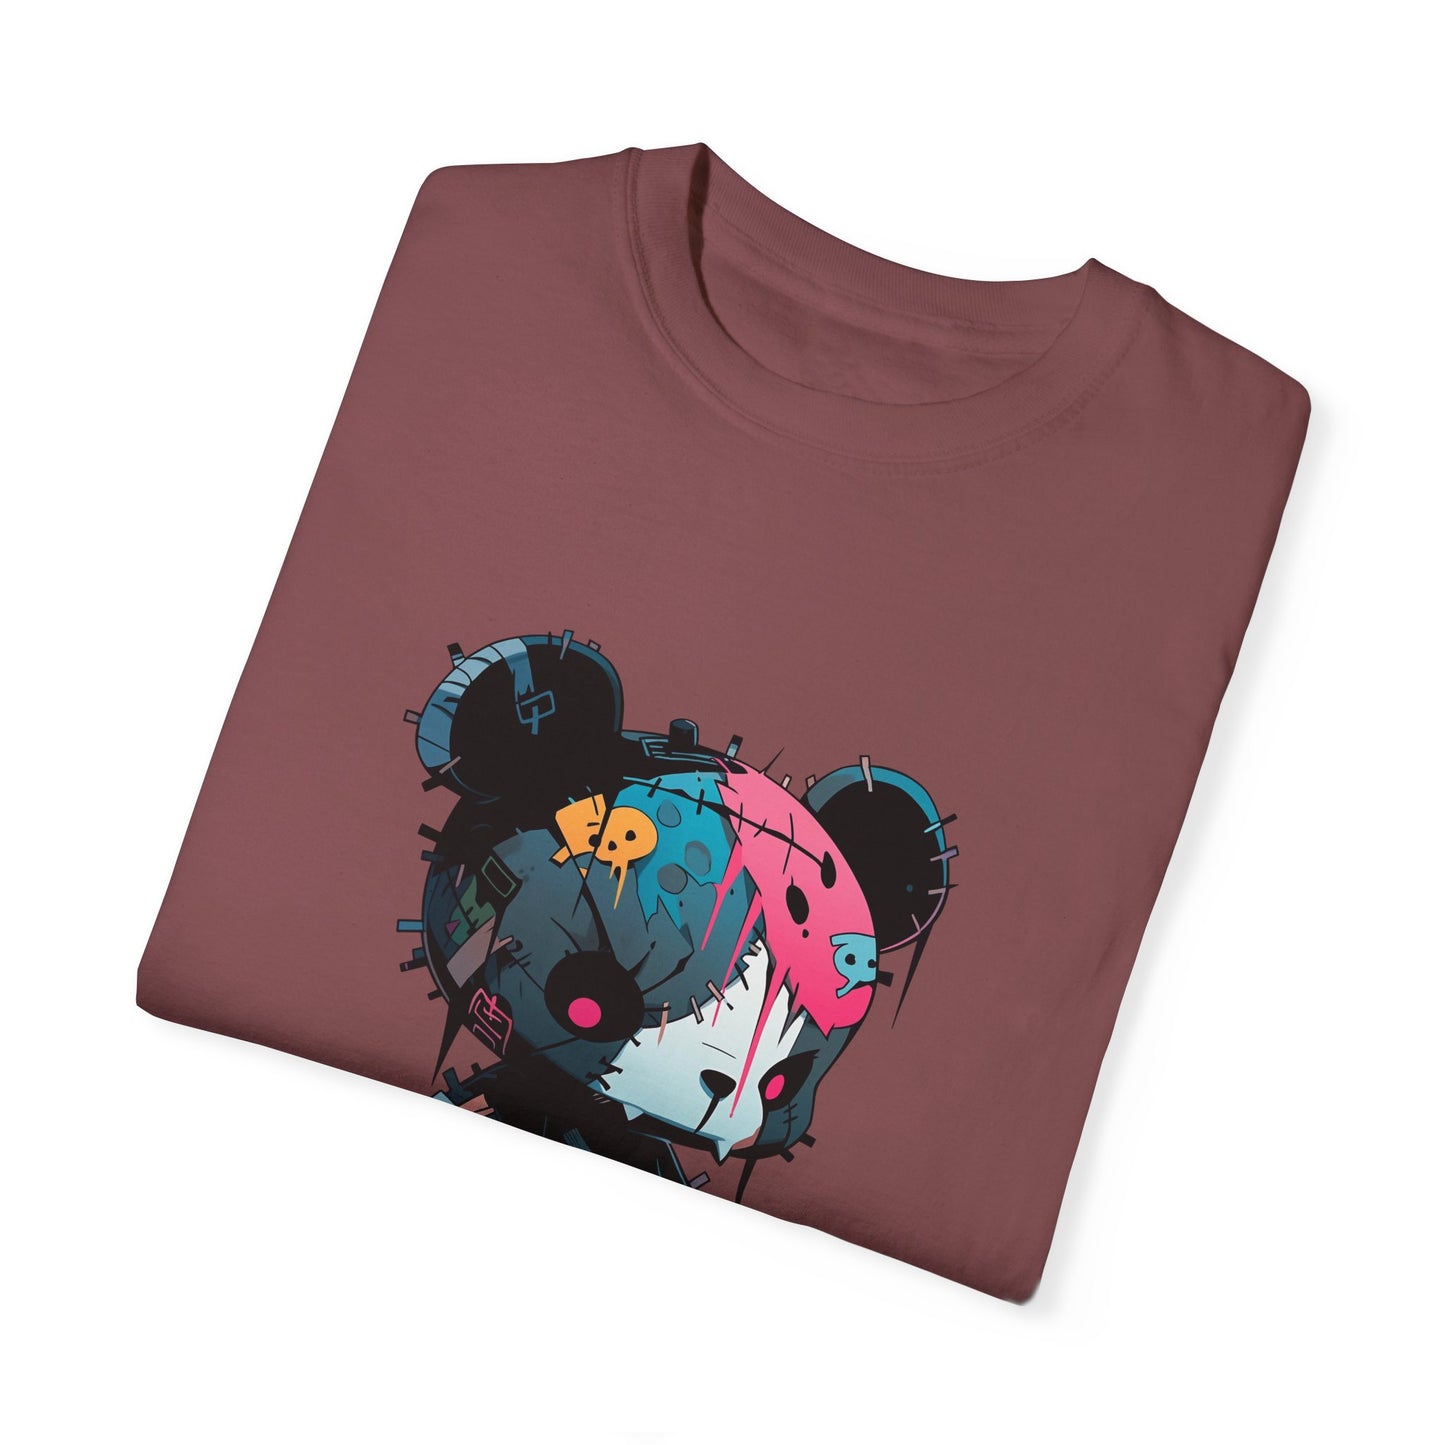 Hip Hop Teddy Bear Graphic Unisex Garment-dyed T-shirt Cotton Funny Humorous Graphic Soft Premium Unisex Men Women Brick T-shirt Birthday Gift-29